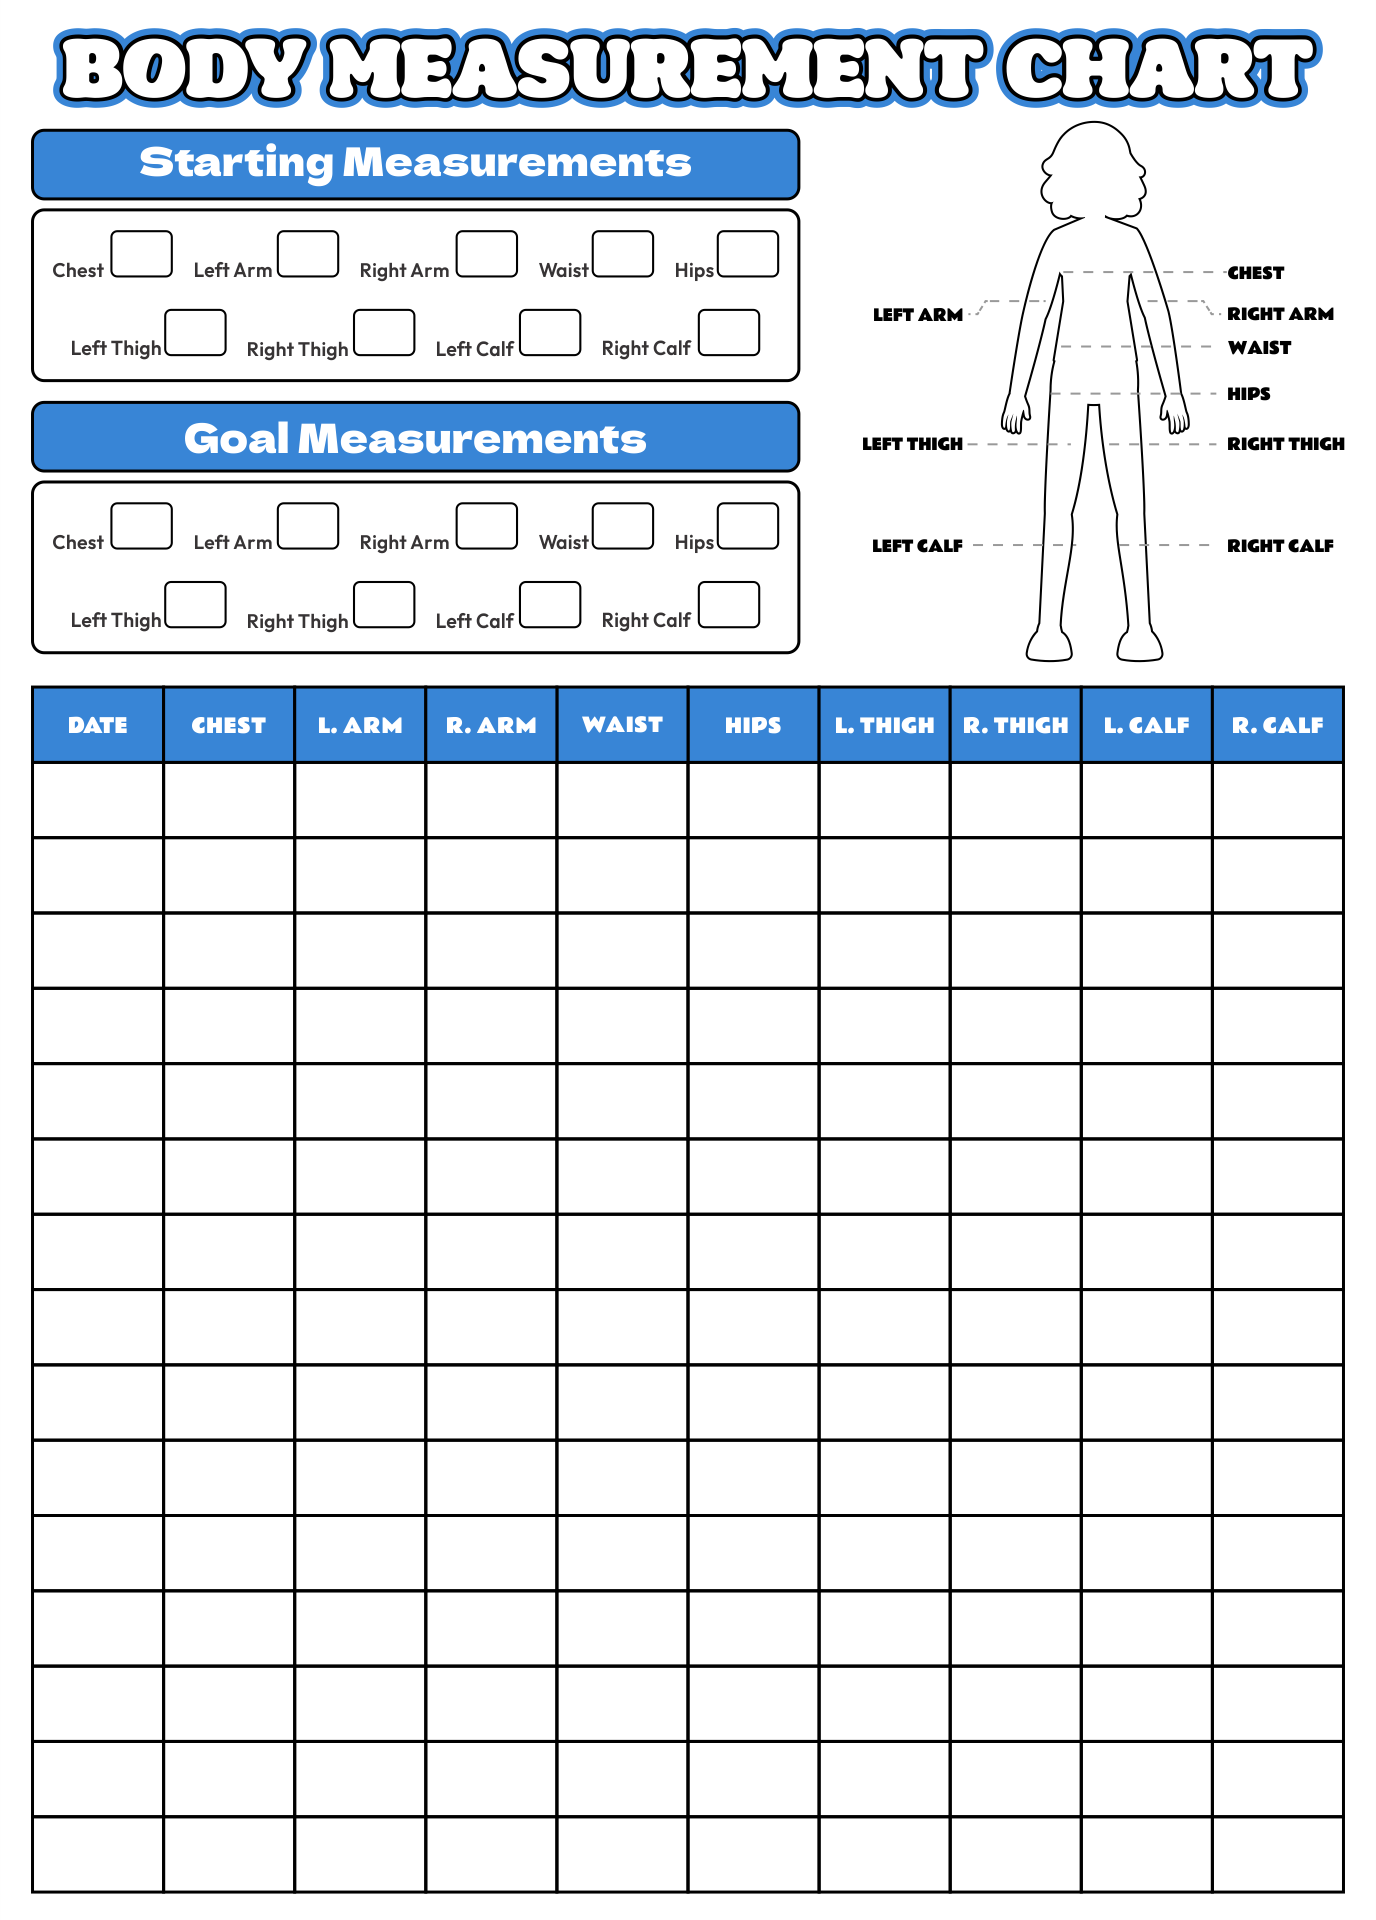 free printable body measurement sheet - Ecosia - Images